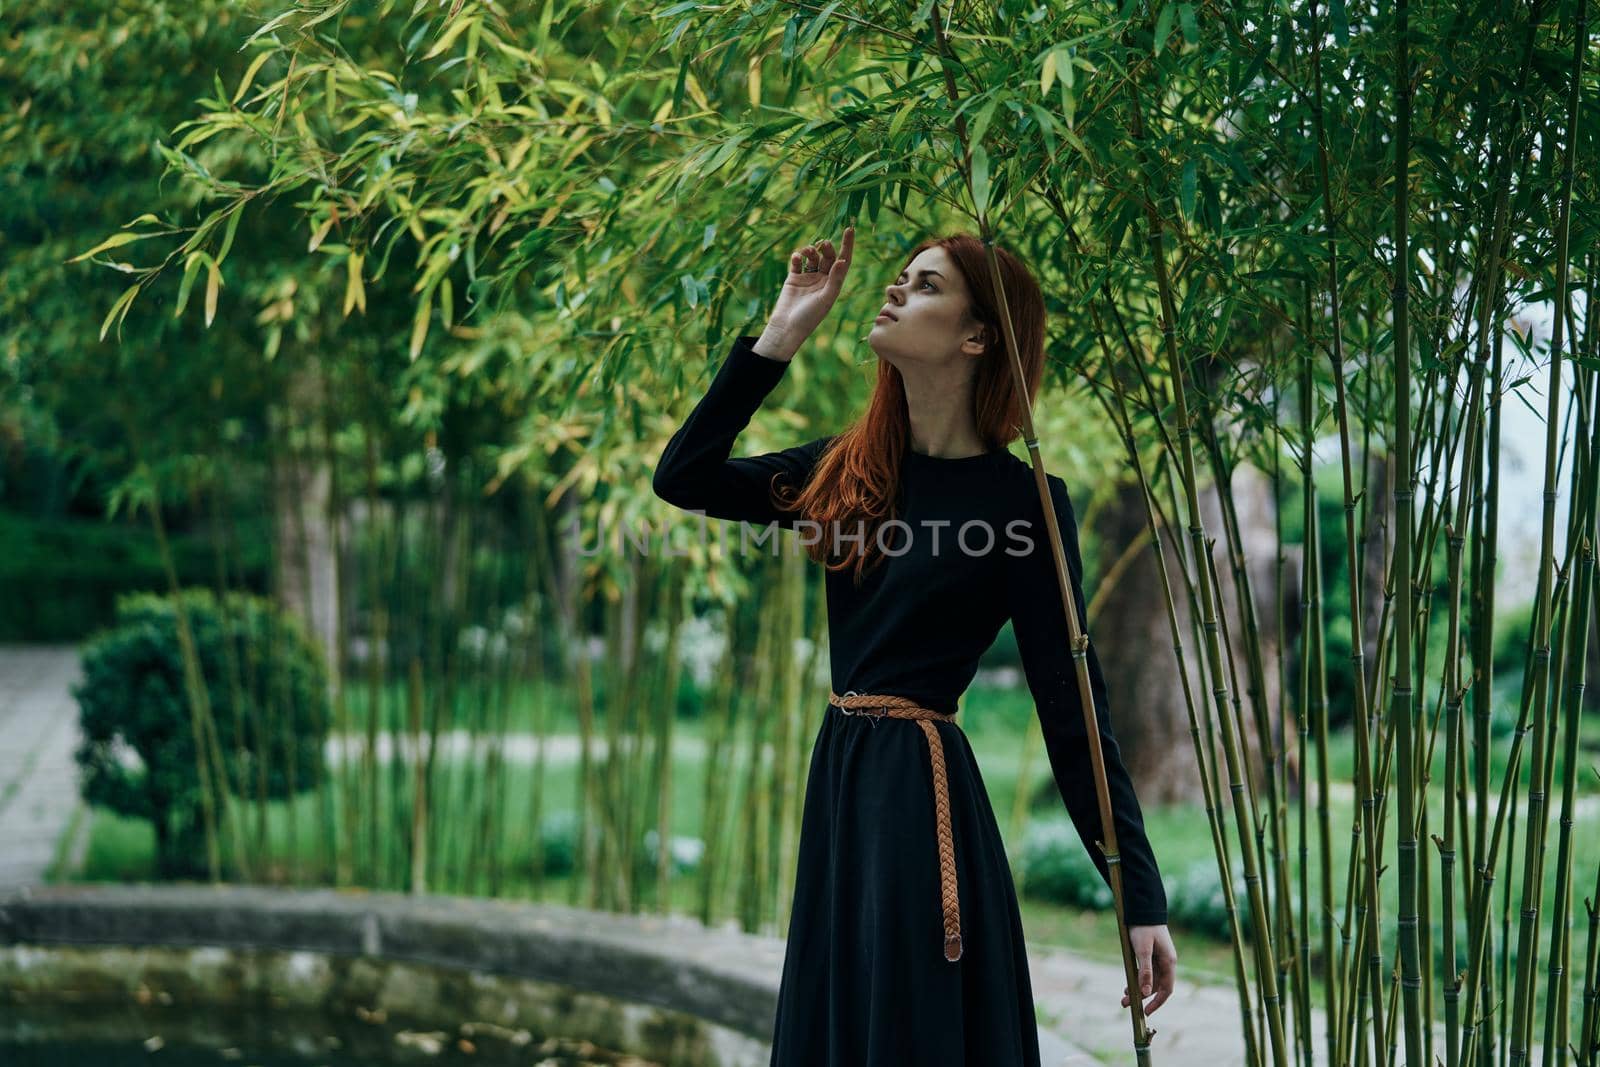 woman in black dress nature walk garden trees fresh air. High quality photo